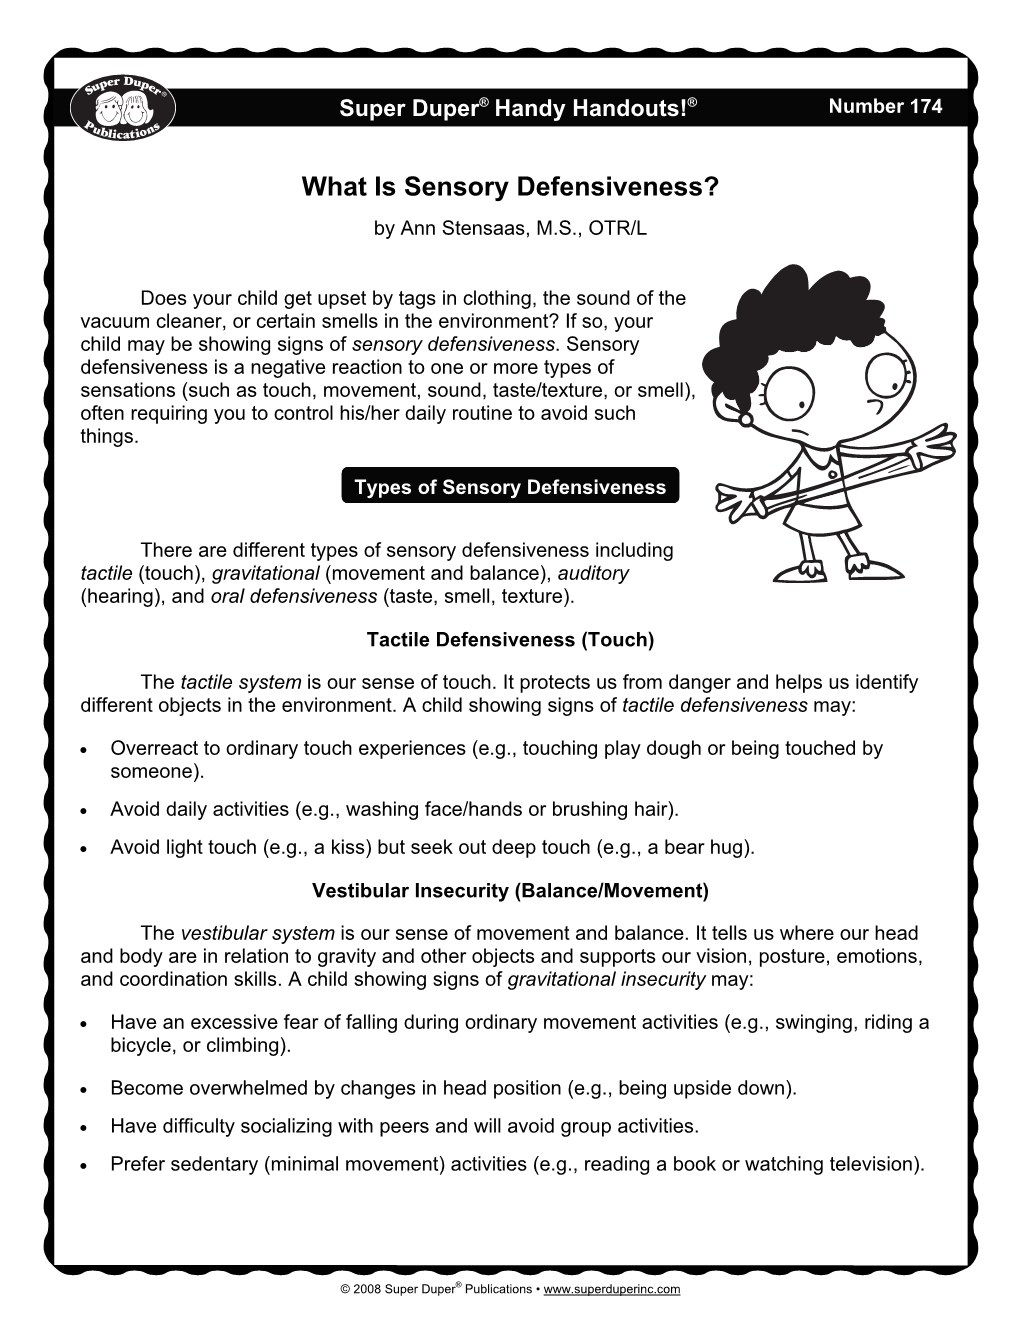 What Is Sensory Defensiveness? by Ann Stensaas, M.S., OTR/L